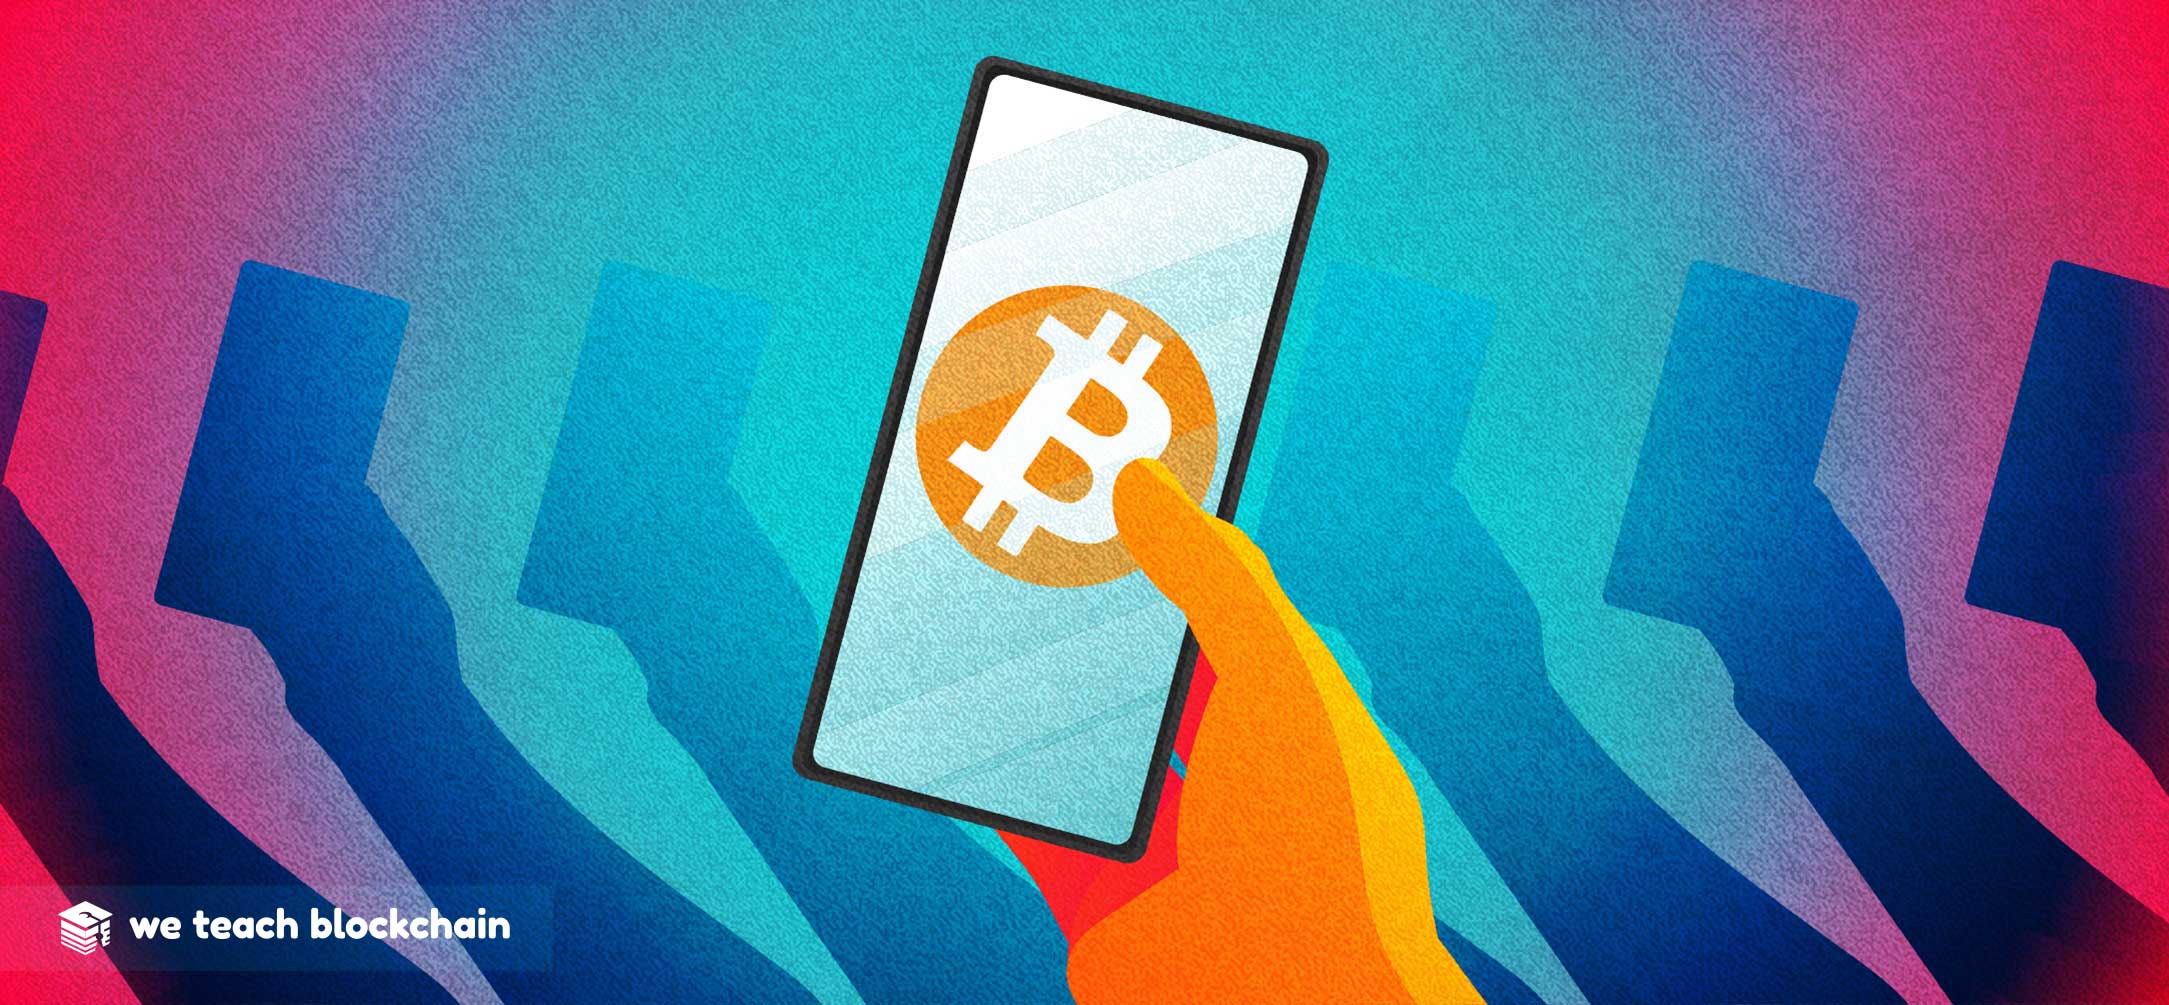 Hand holding phone with Bitcoin logo